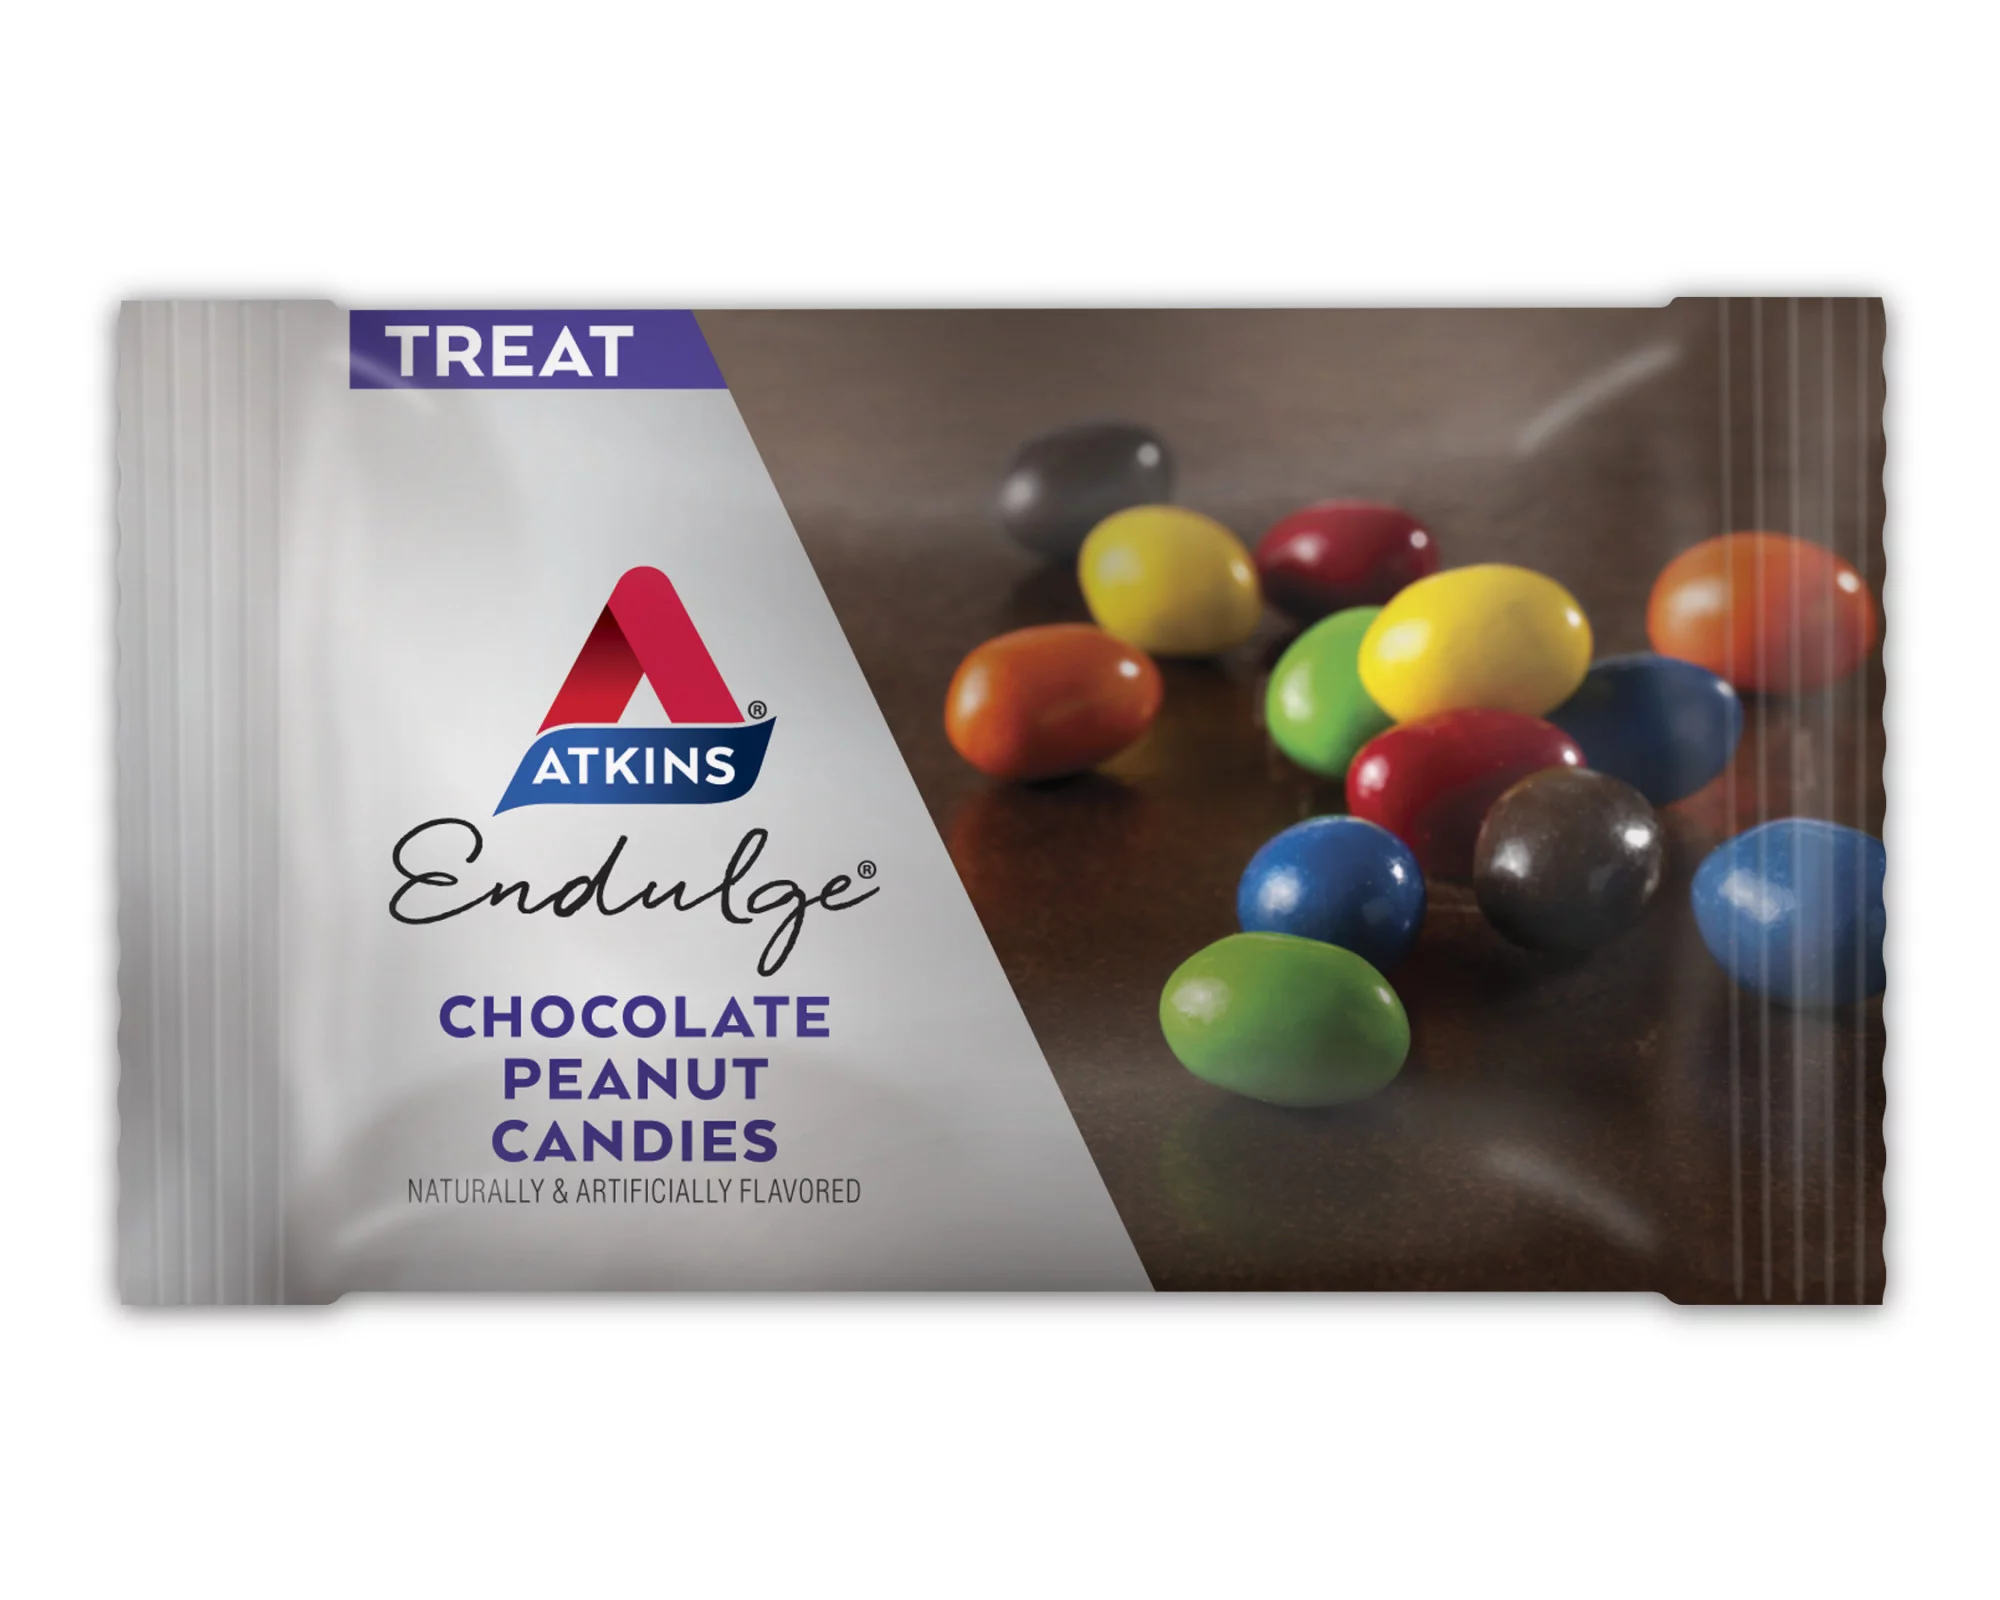 Atkins Endulge Chocolate Peanut Candies M&Ms Reviews